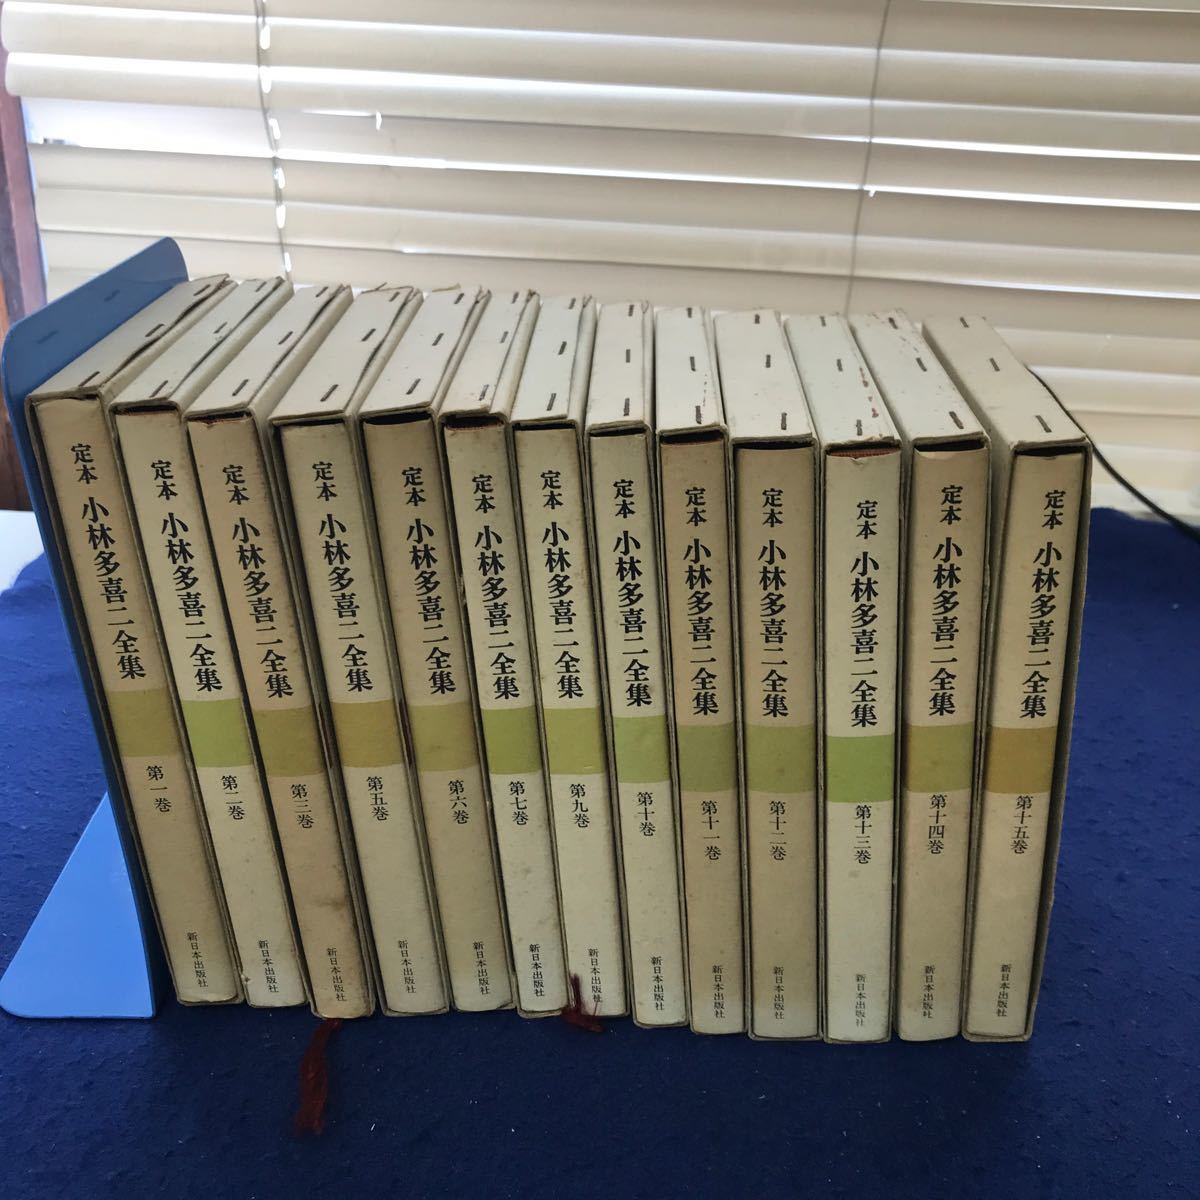 a46-002 [ don't fit summarize ].book@ Kobayashi Takiji complete set of works all 15 volume middle 13 pcs. (4*8 volume lack of ) New Japan publish company 